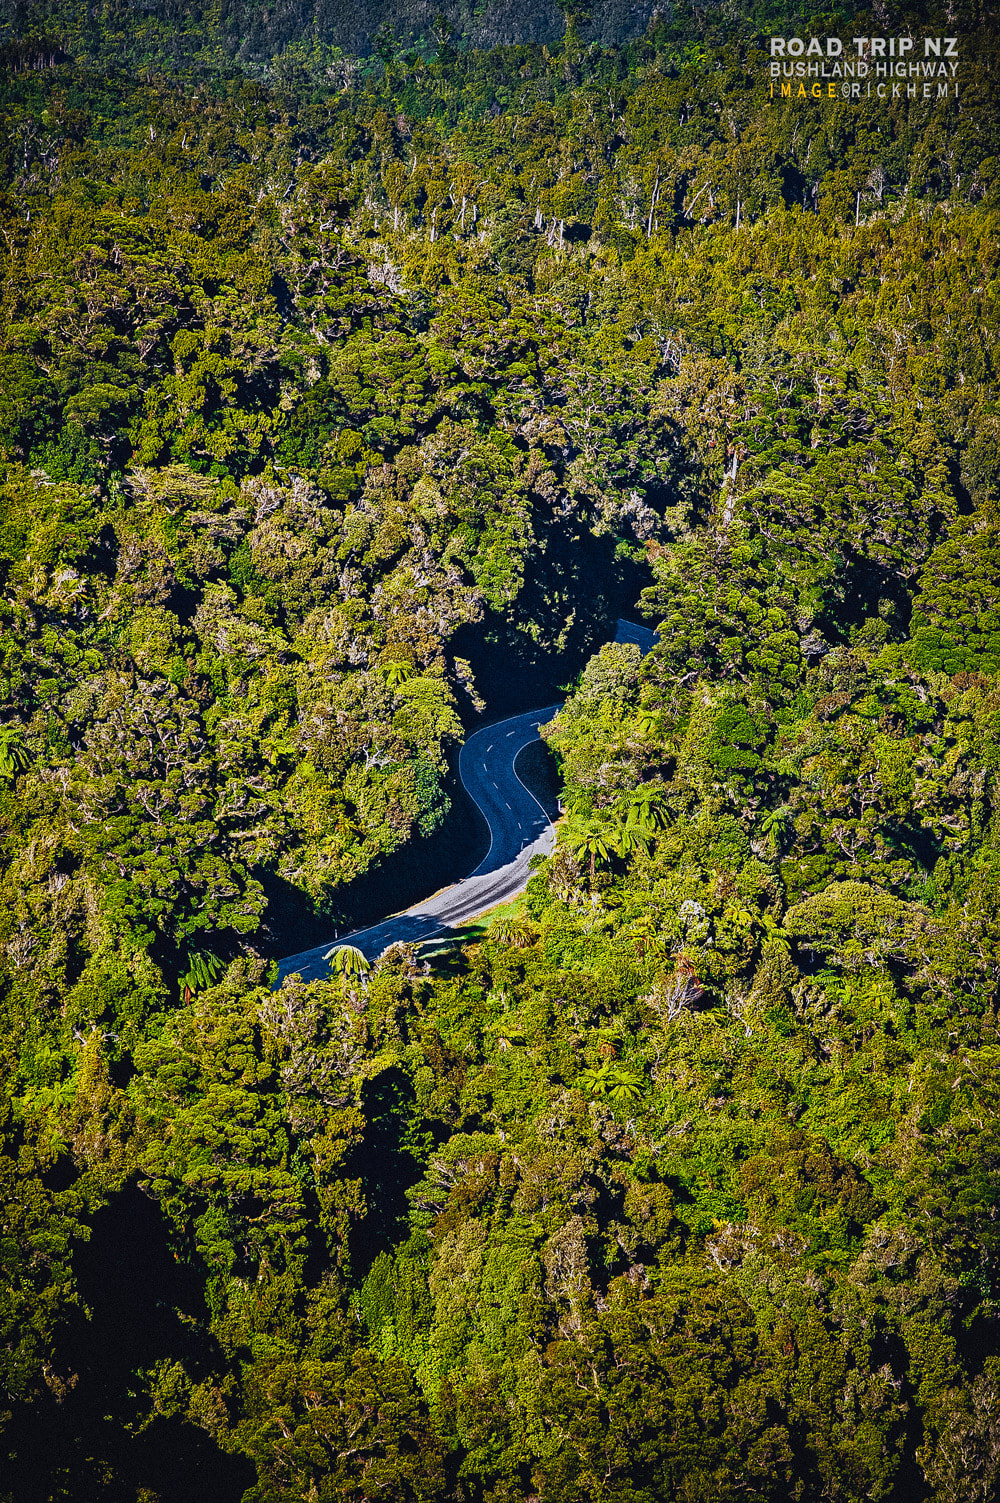 solo self-driving road trip Aotearoa New Zealand, bushland native highway, image by Rick Hemi